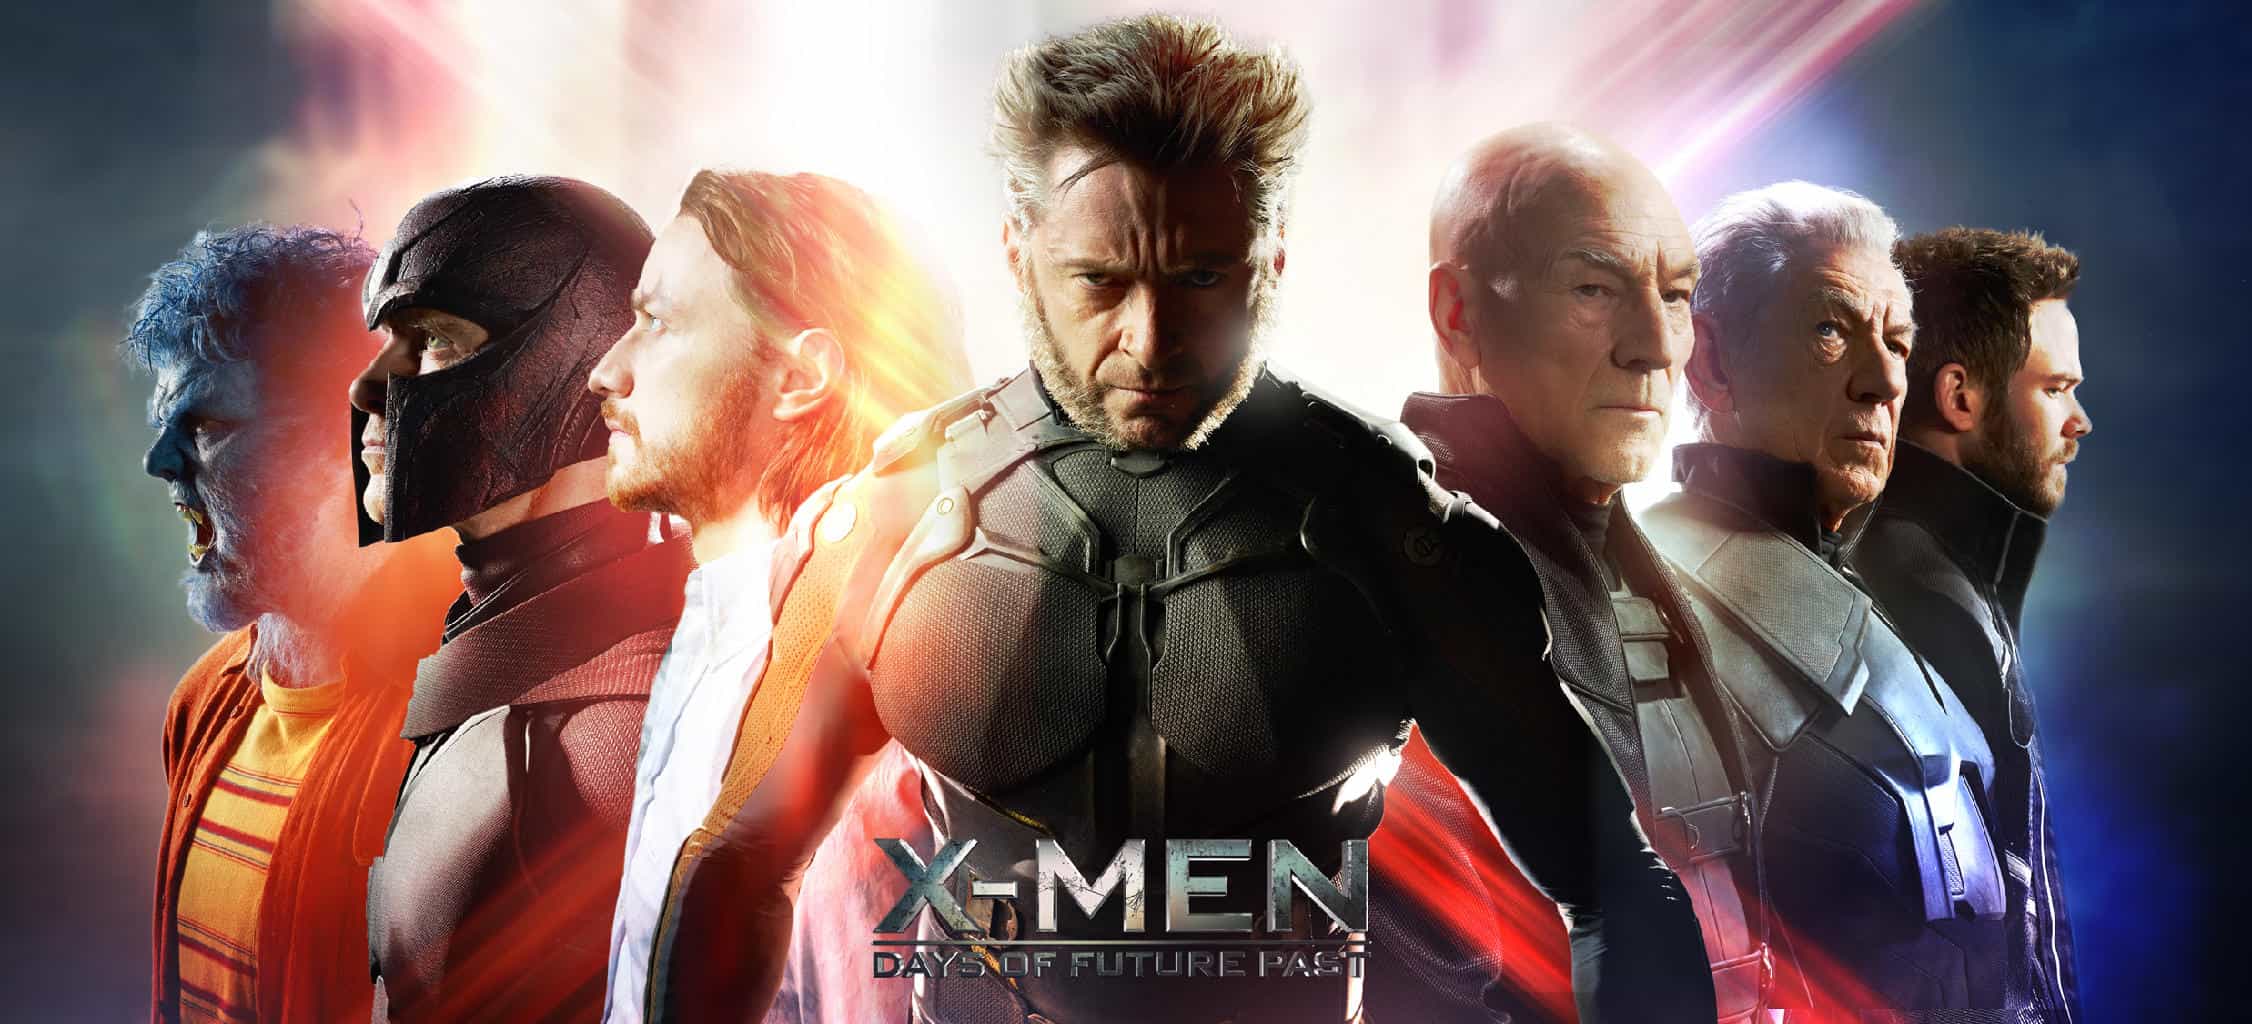 X-Men: Days of Future Past 4K 2014 big poster